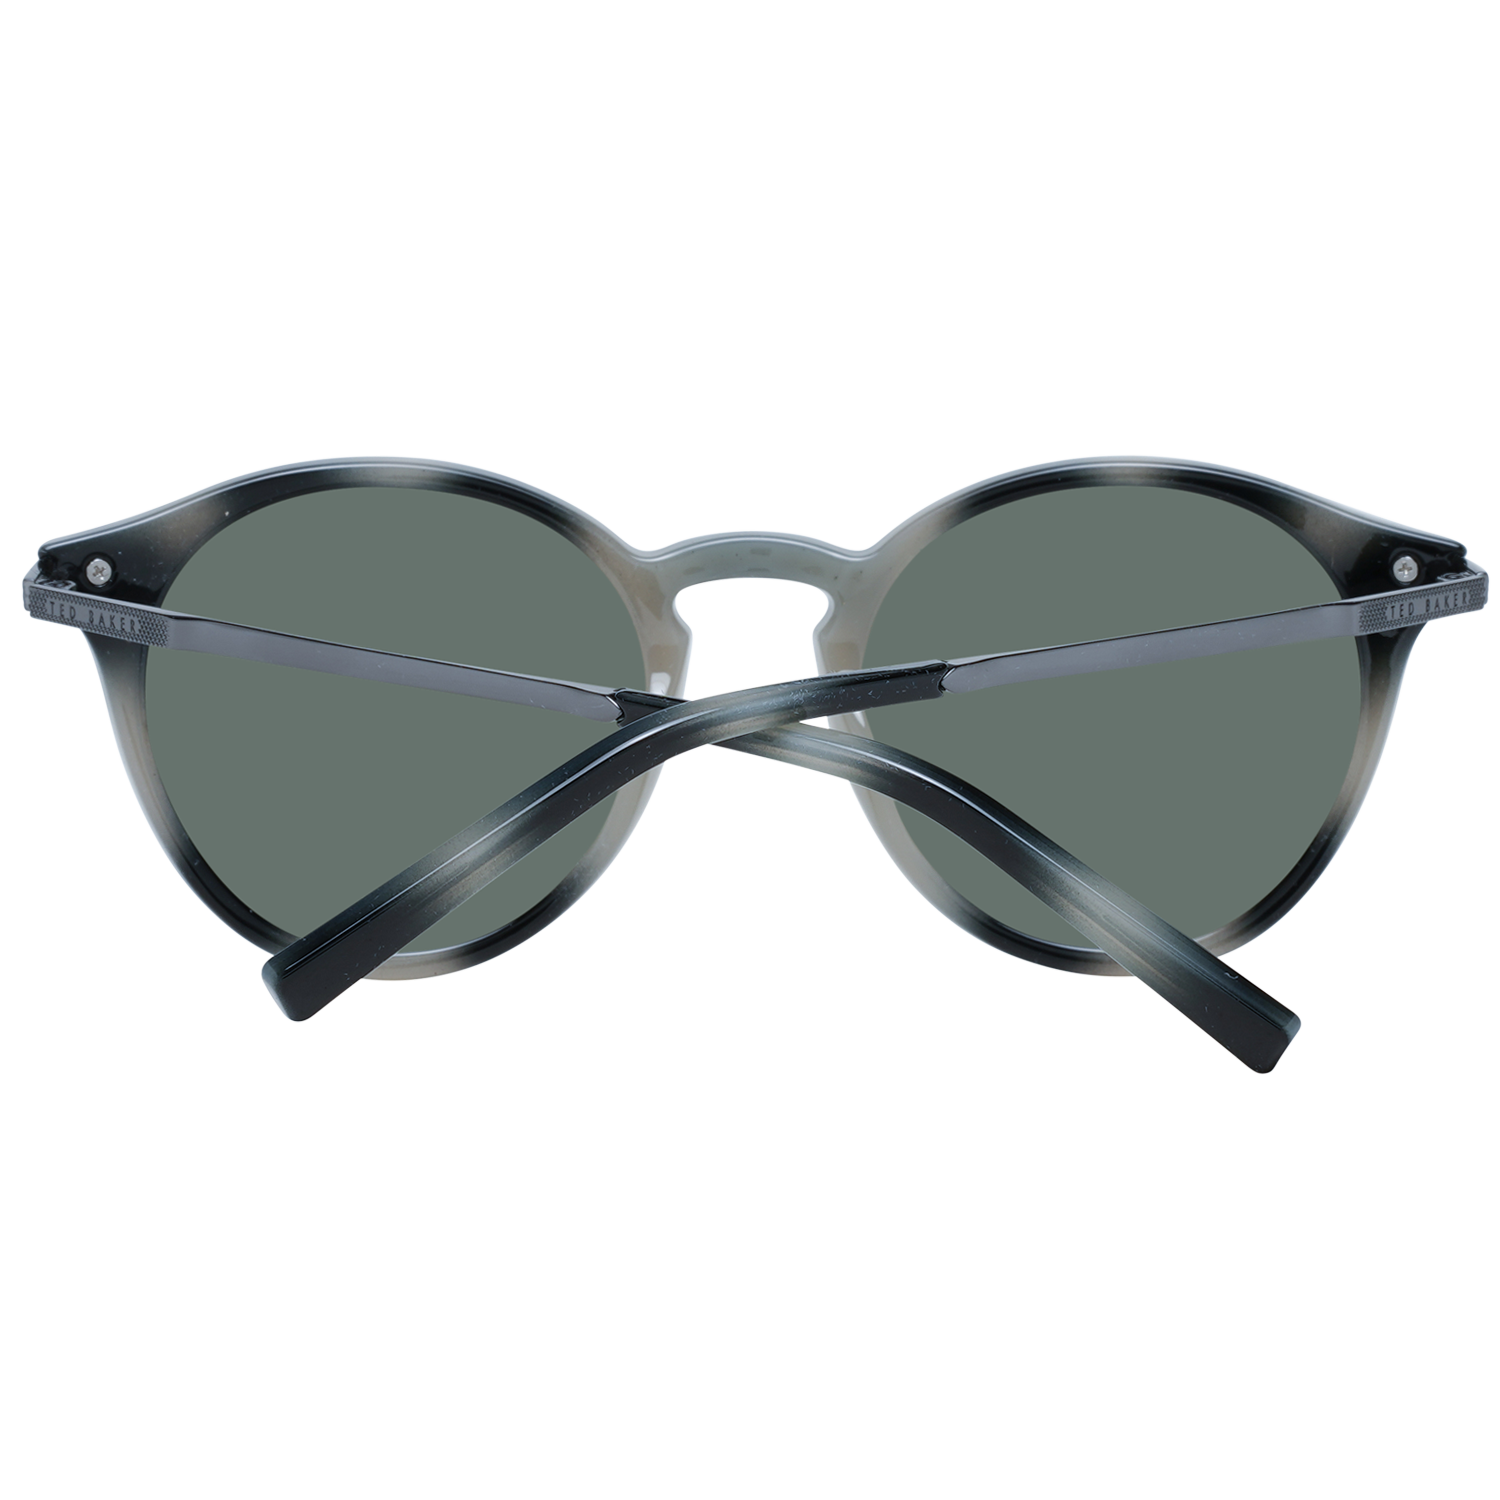 Ted Baker Sunglasses Ted Baker Sunglasses TB1632 900 51 Eyeglasses Eyewear UK USA Australia 